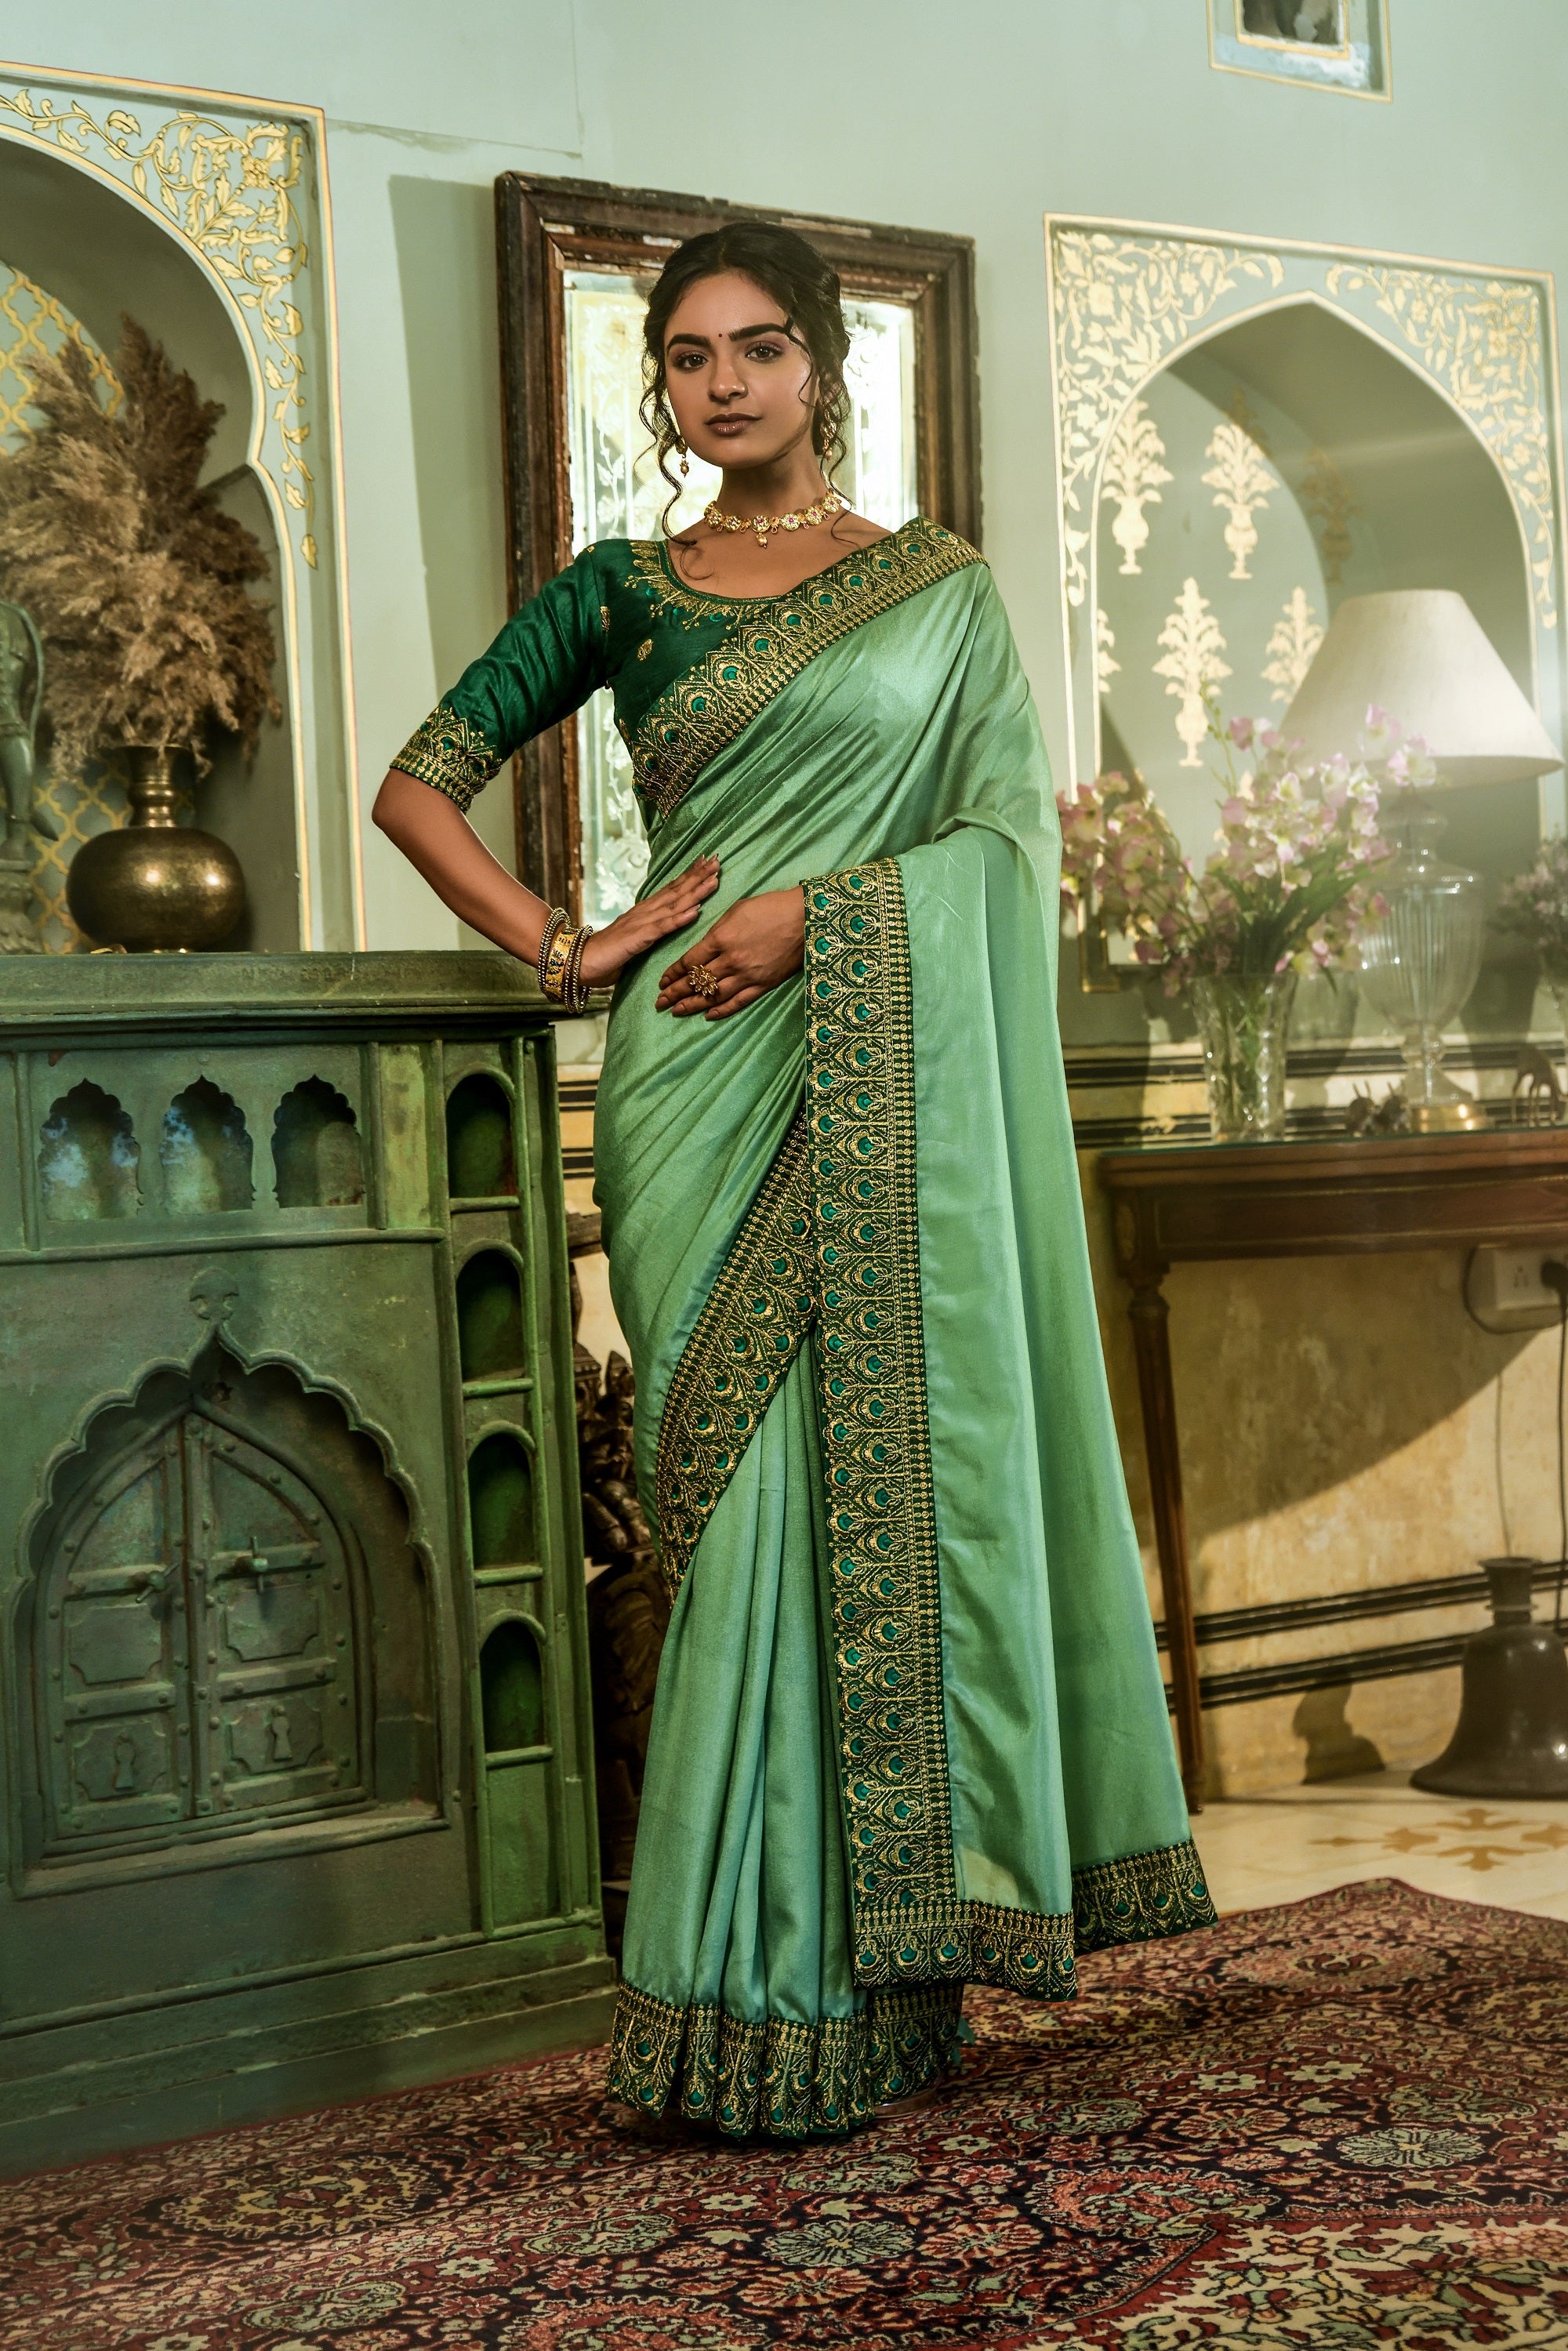 Utsav Fashion Offers Online Sarees Store Coupons Saris Shop Discounts 2024